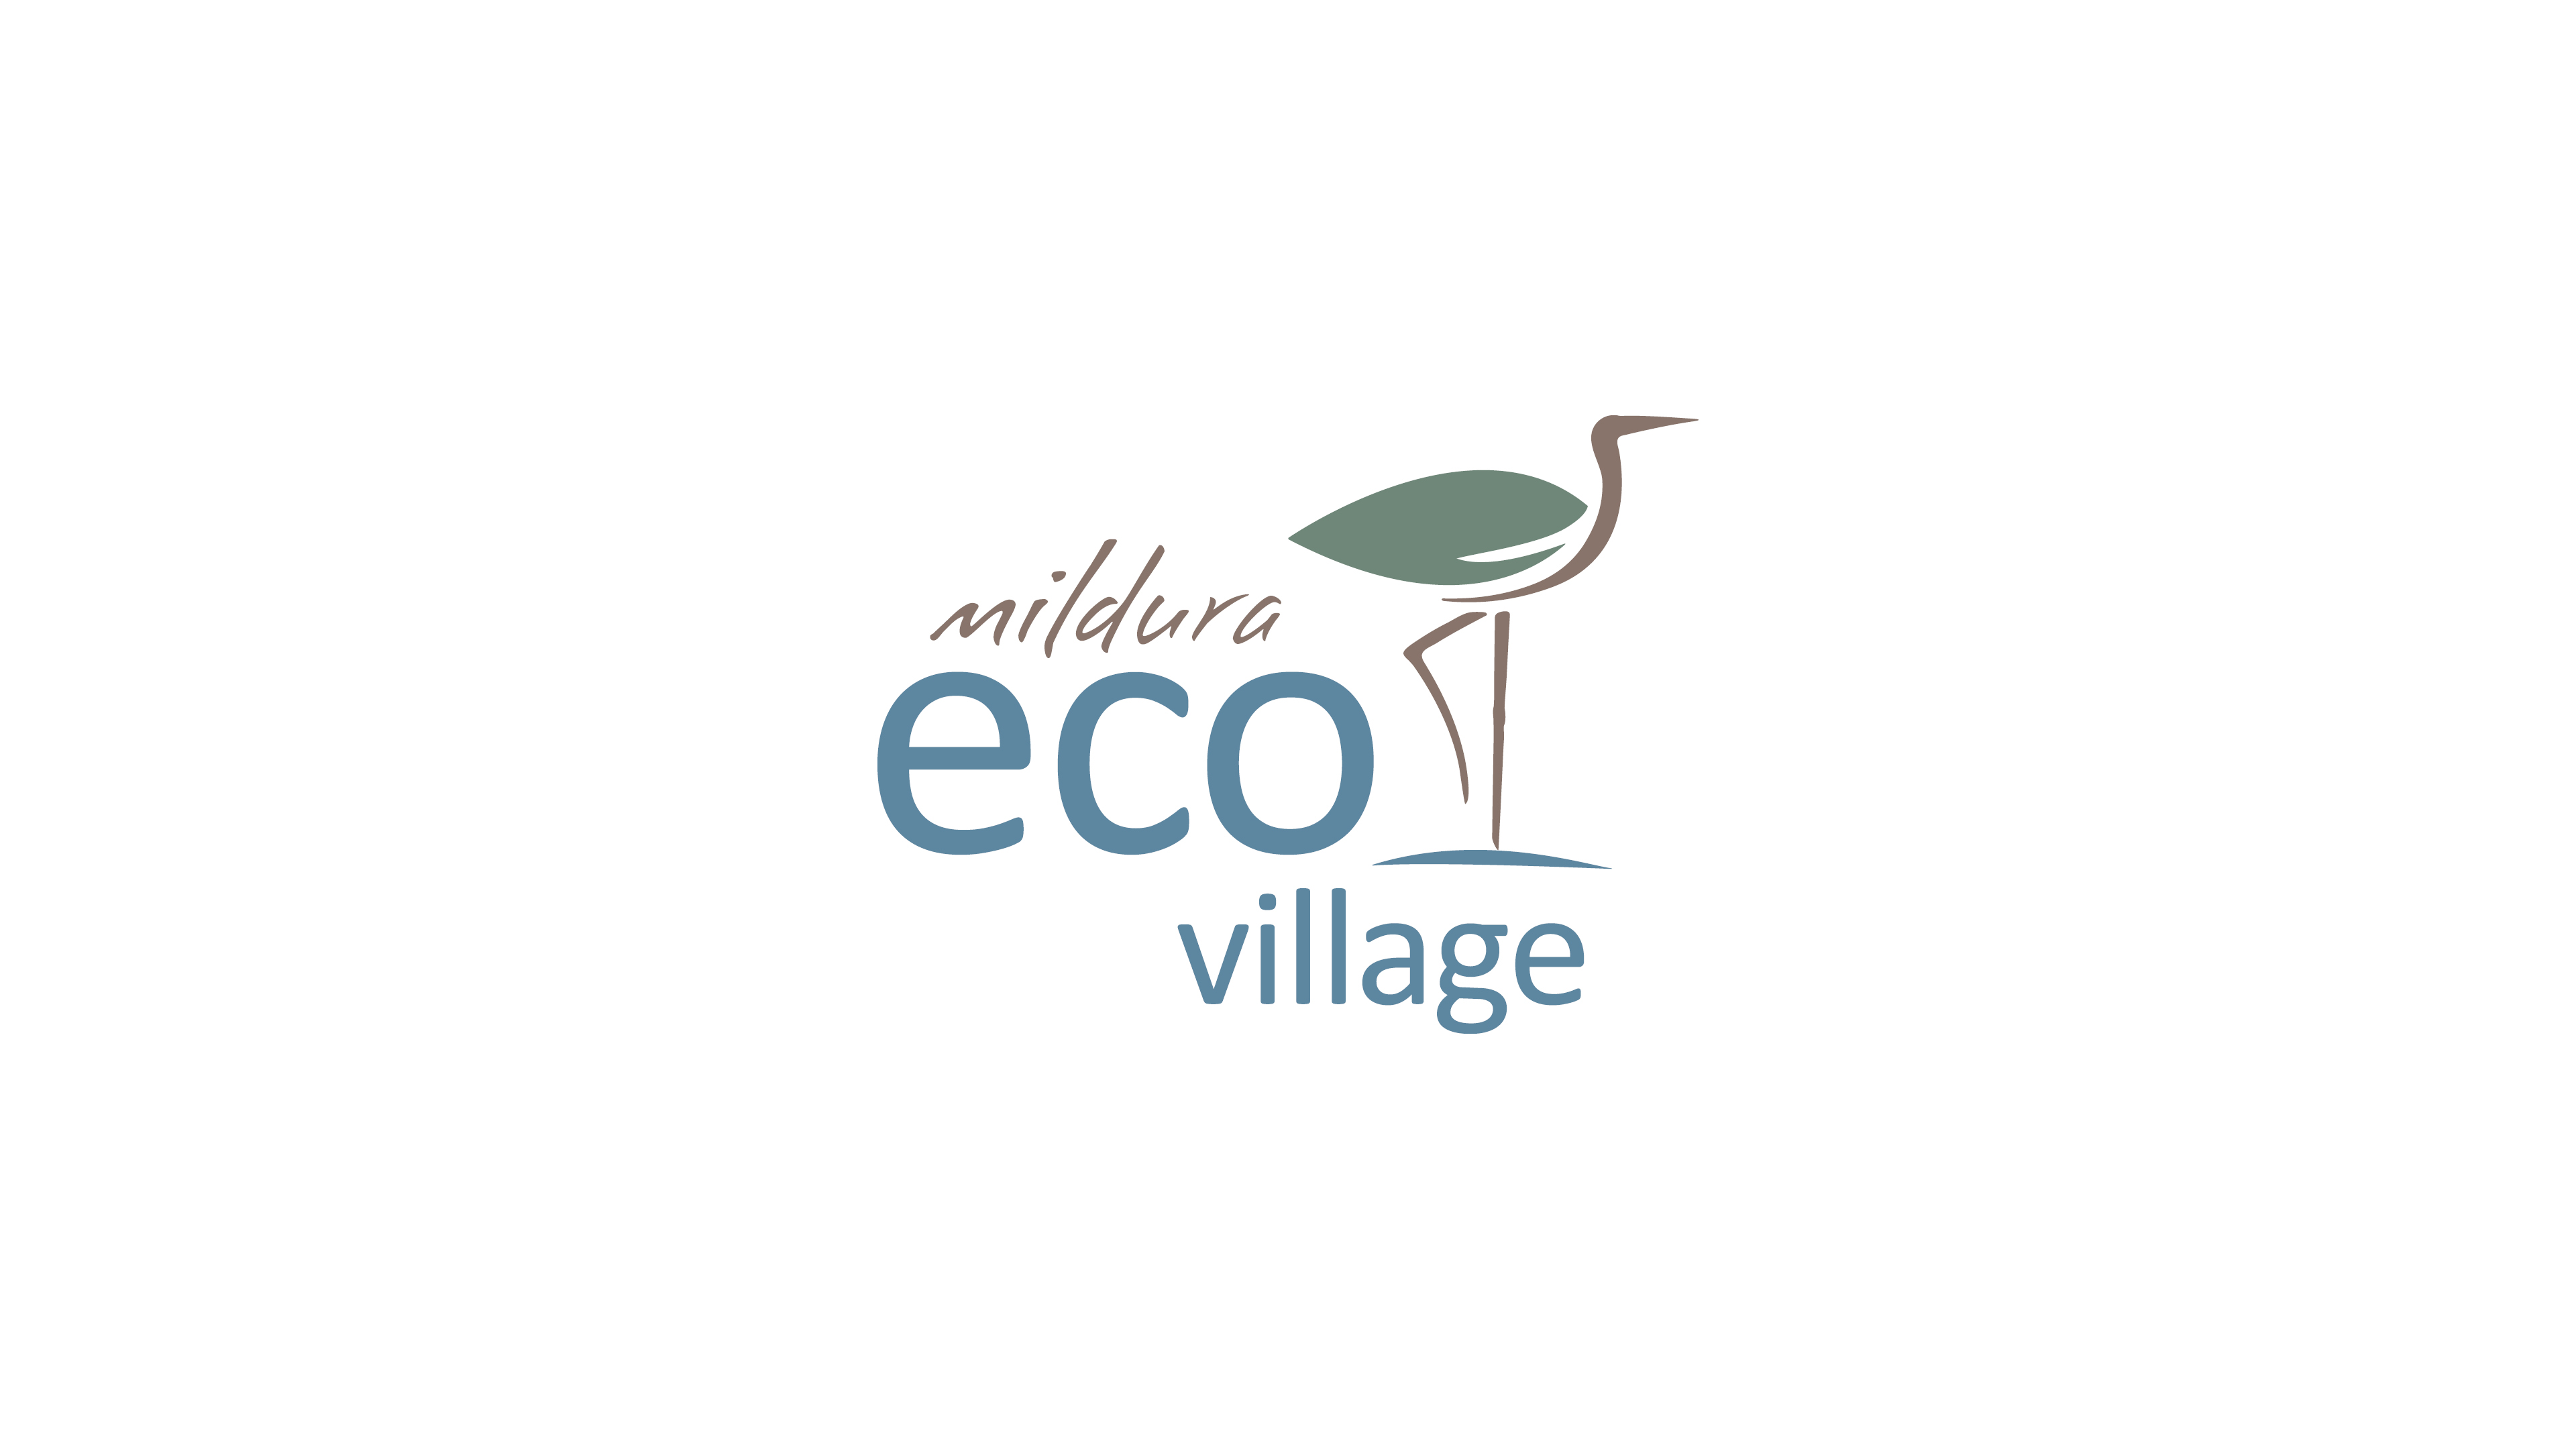 Mildura Eco Village Logo Design - Saunders Design Group